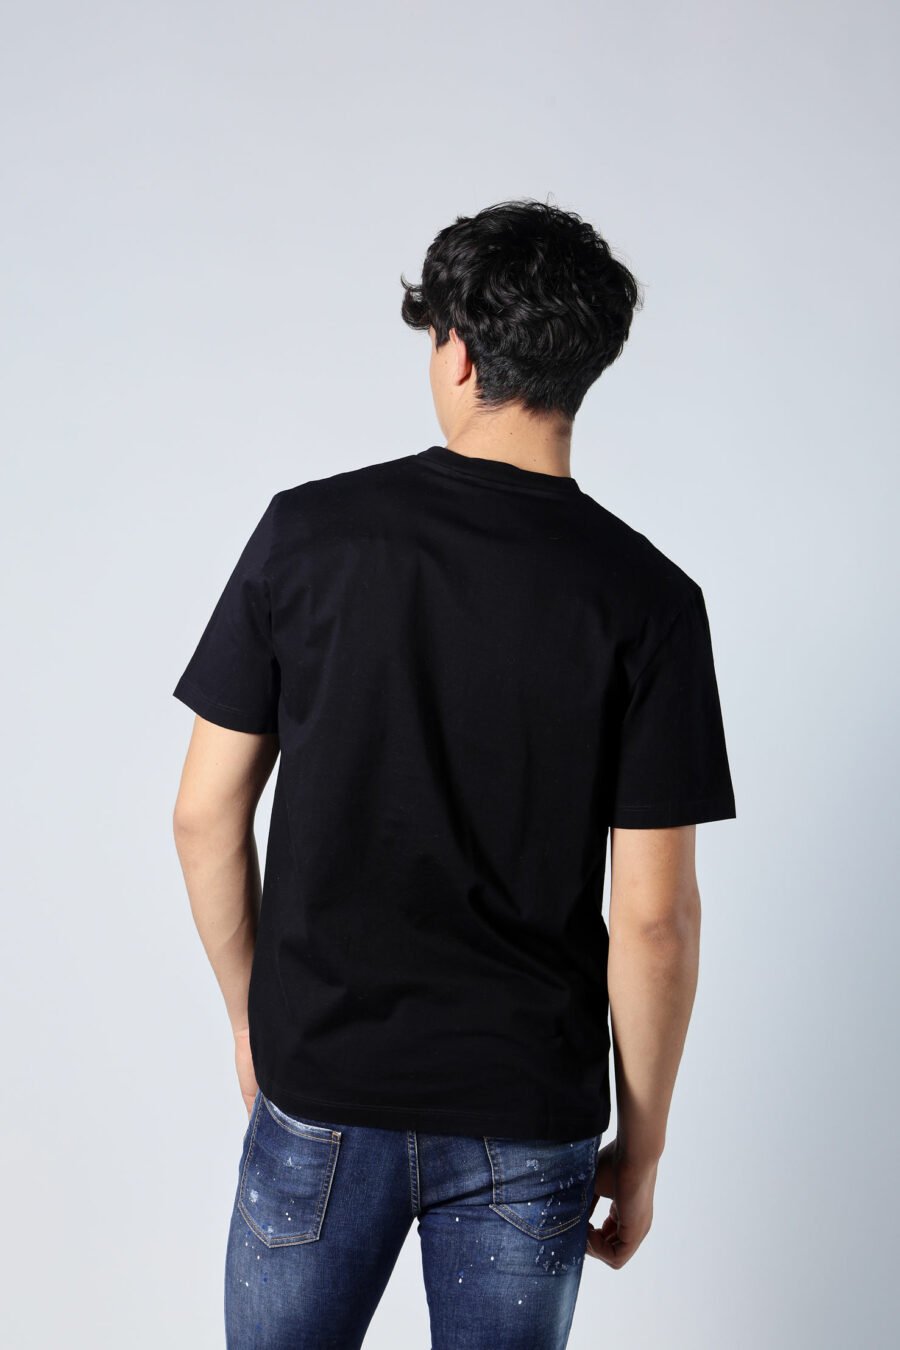 Camiseta negra con minilogo blanco "bold" y hoja naranja - Untitled Catalog 05671